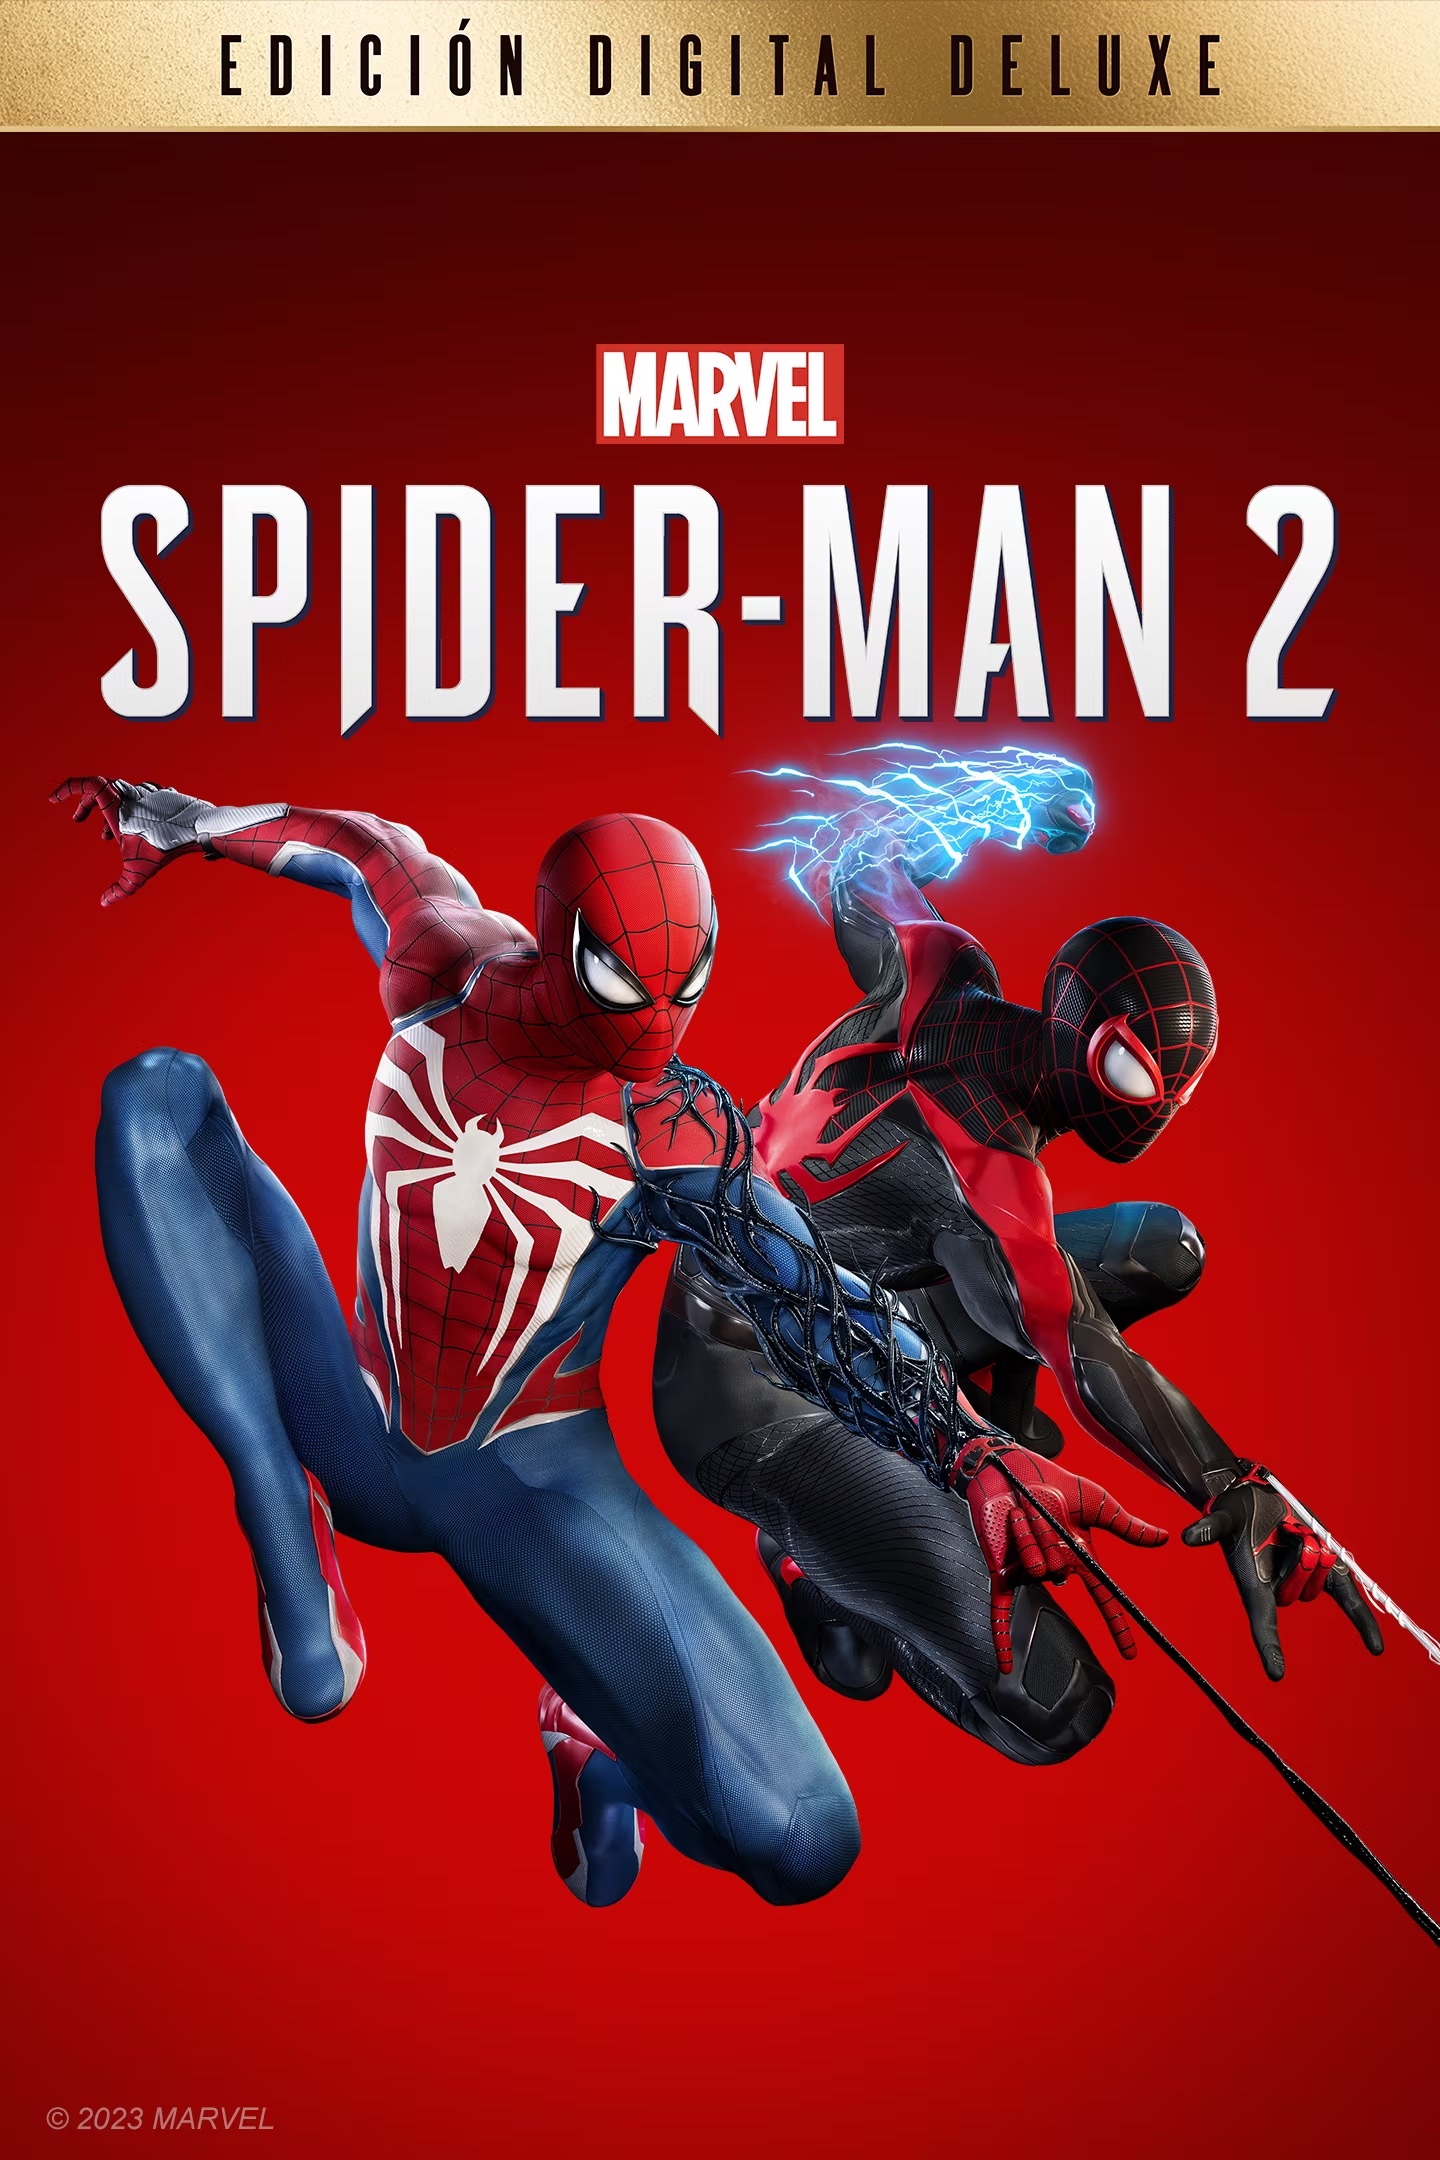 Sony anuncia Marvel's Spider-Man 2 con un espectacular tráiler